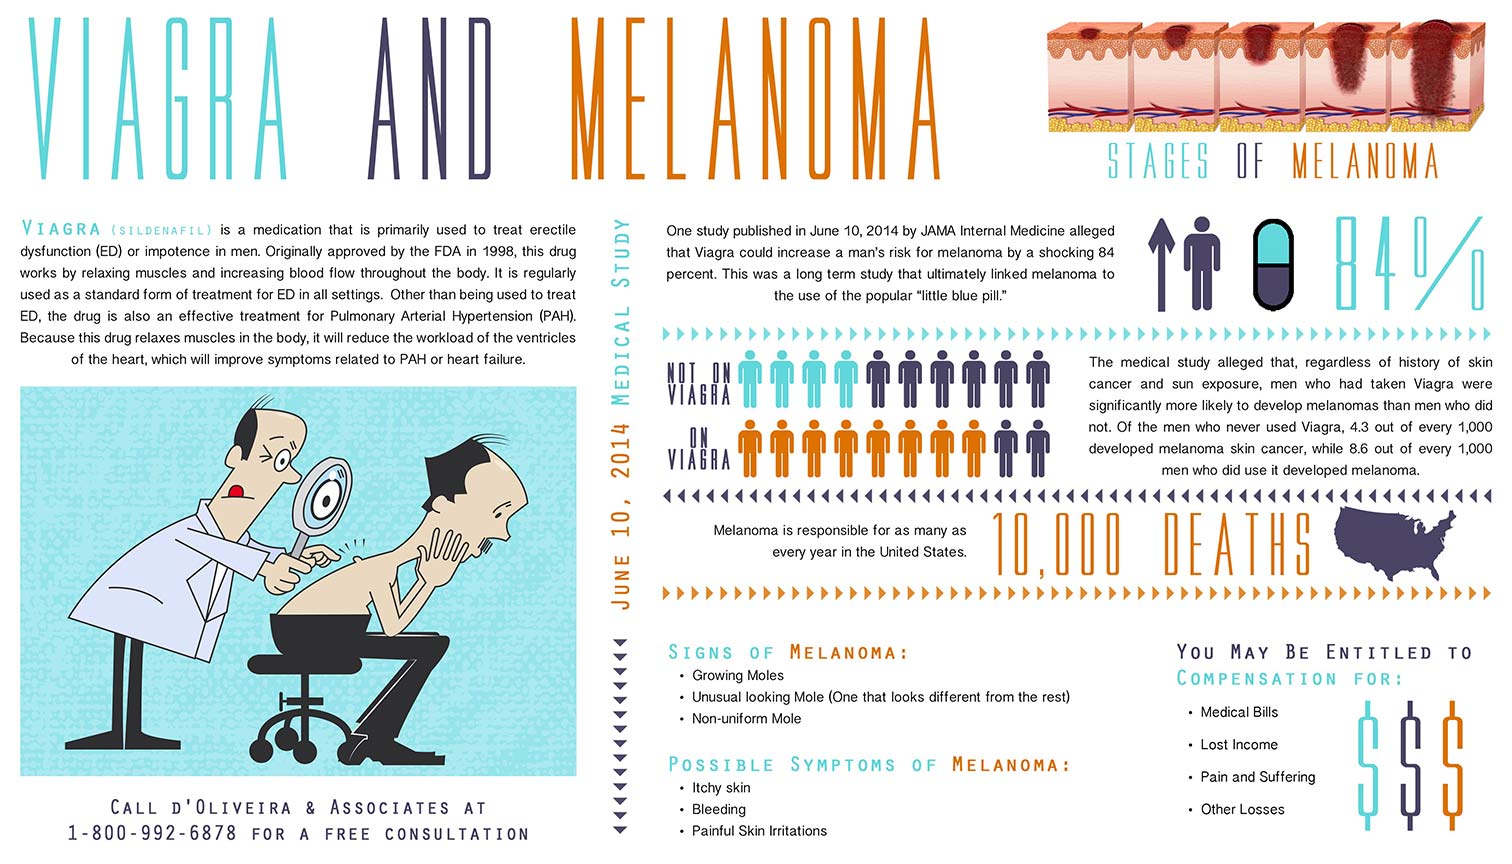 Viagra and Melanoma Infographic